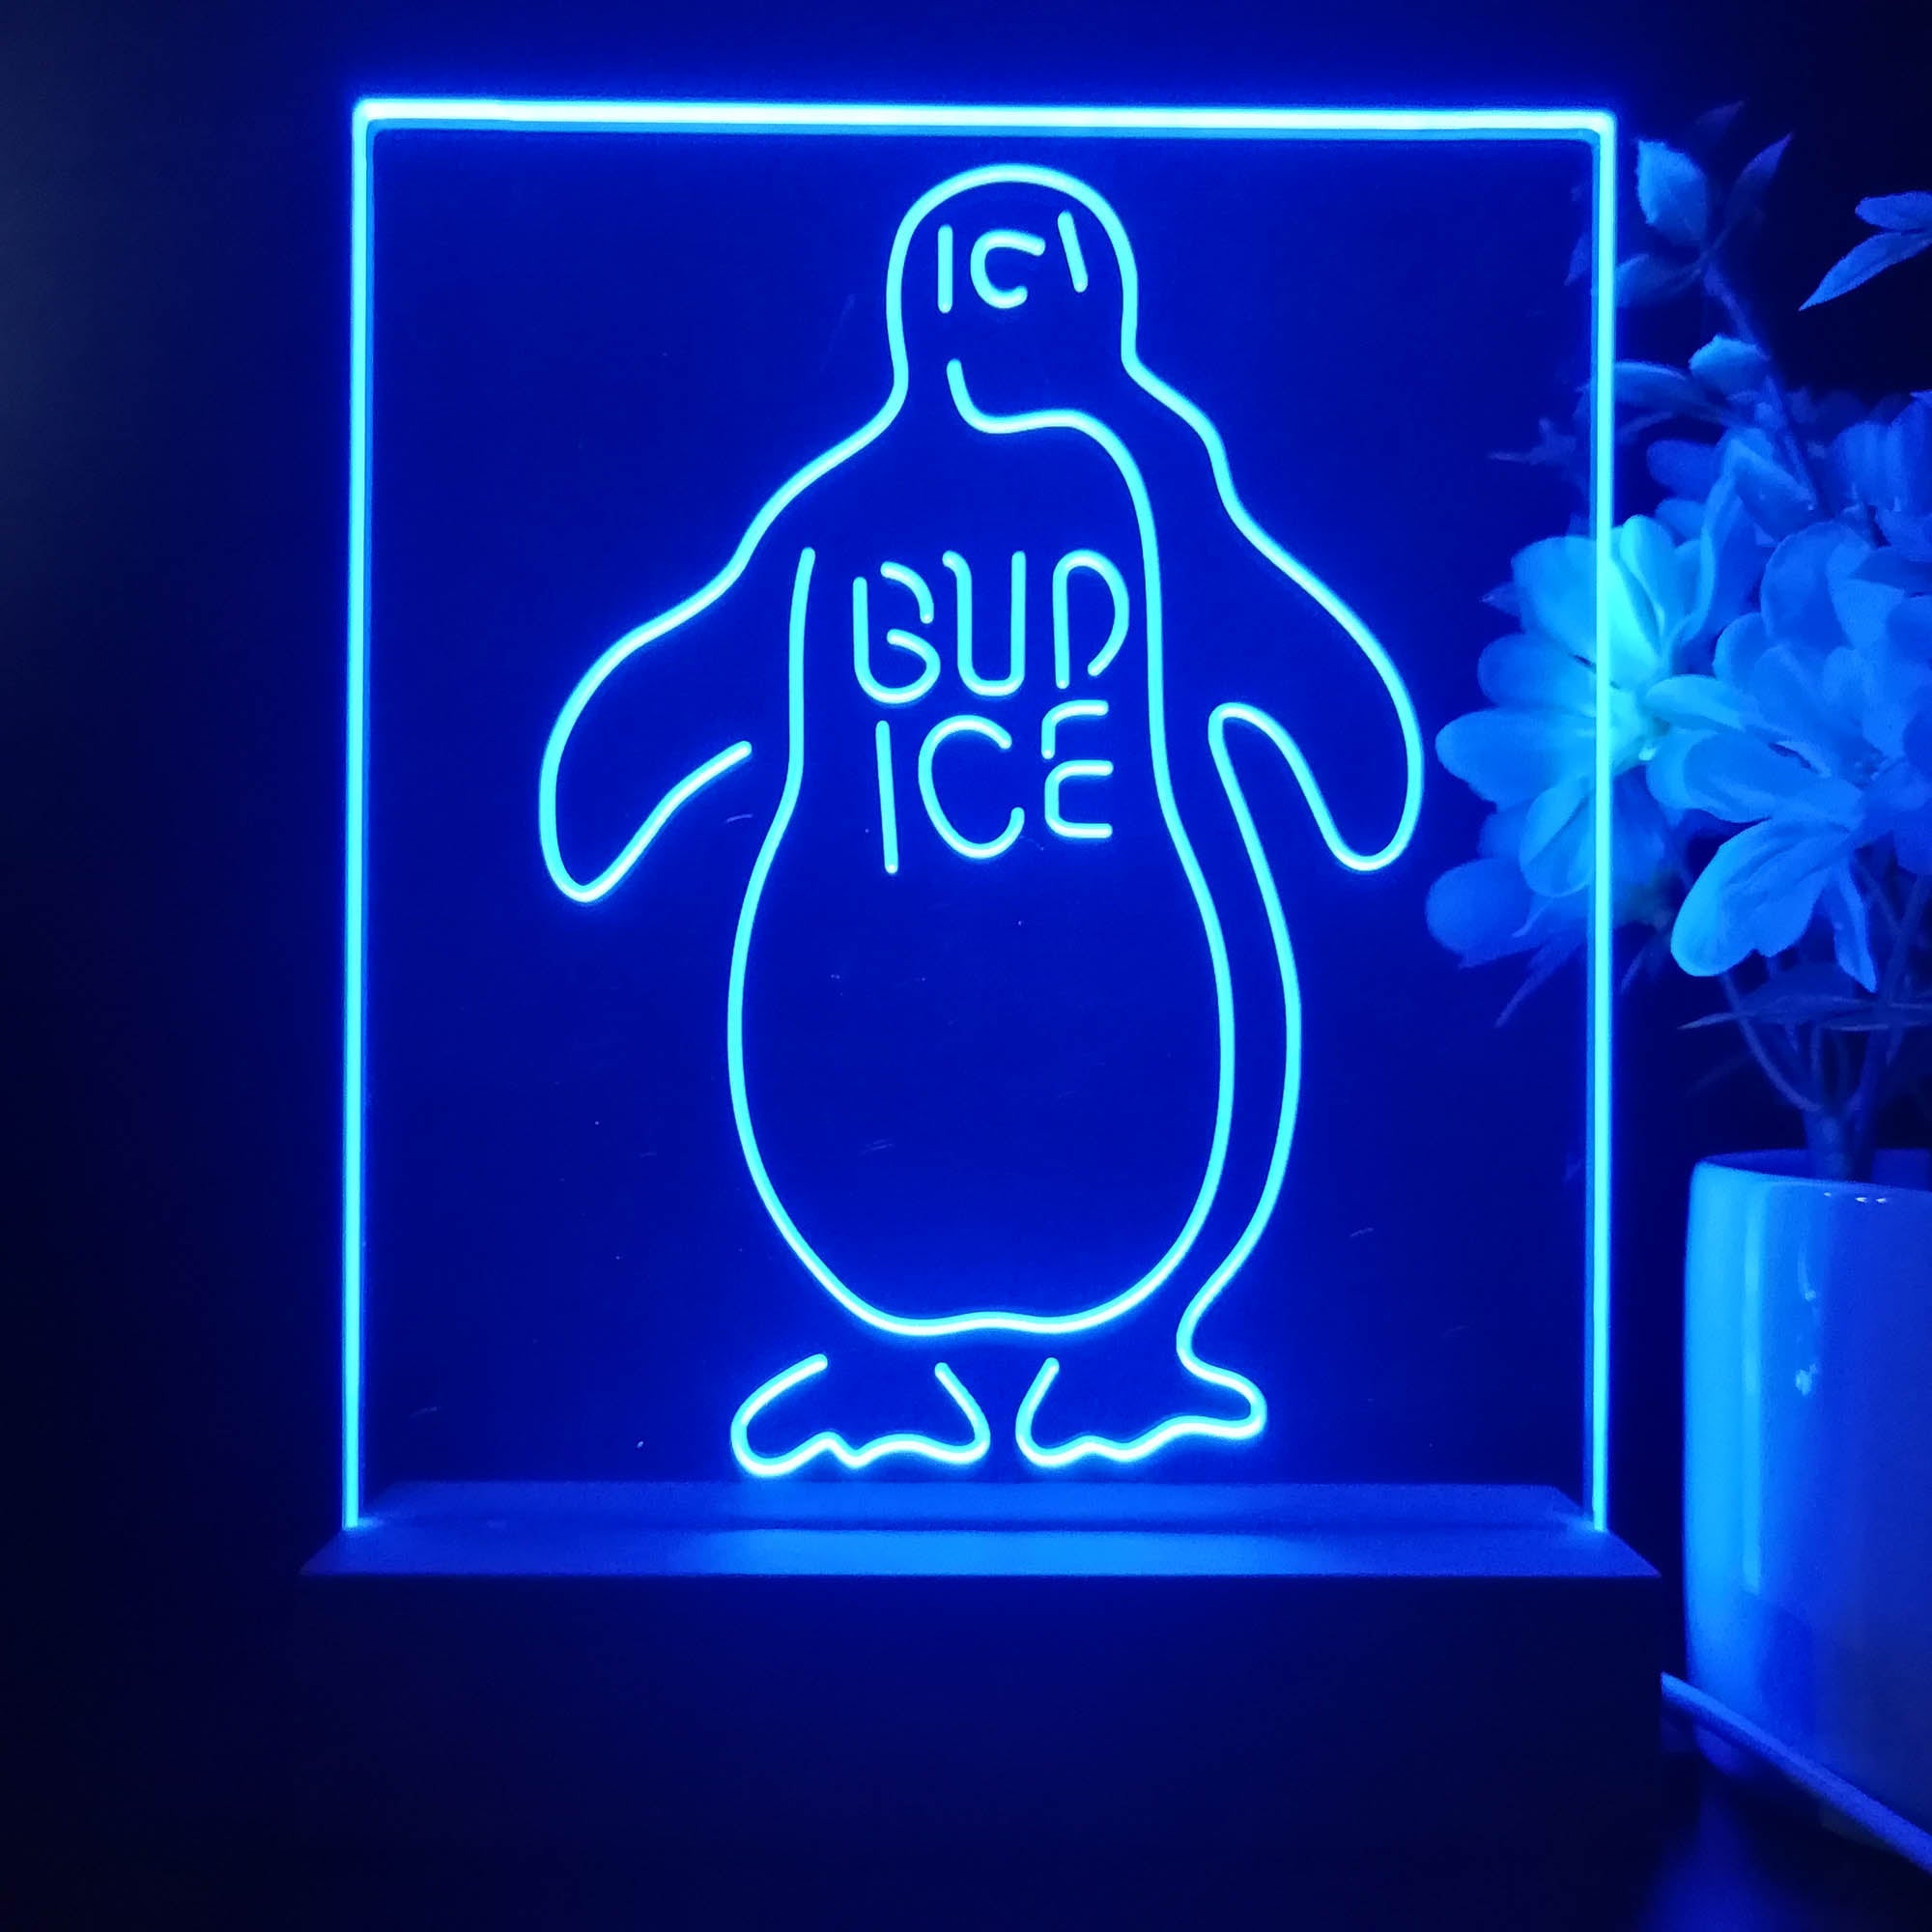 Bud Ice Penguin Beer Night Light Neon Pub Bar Lamp